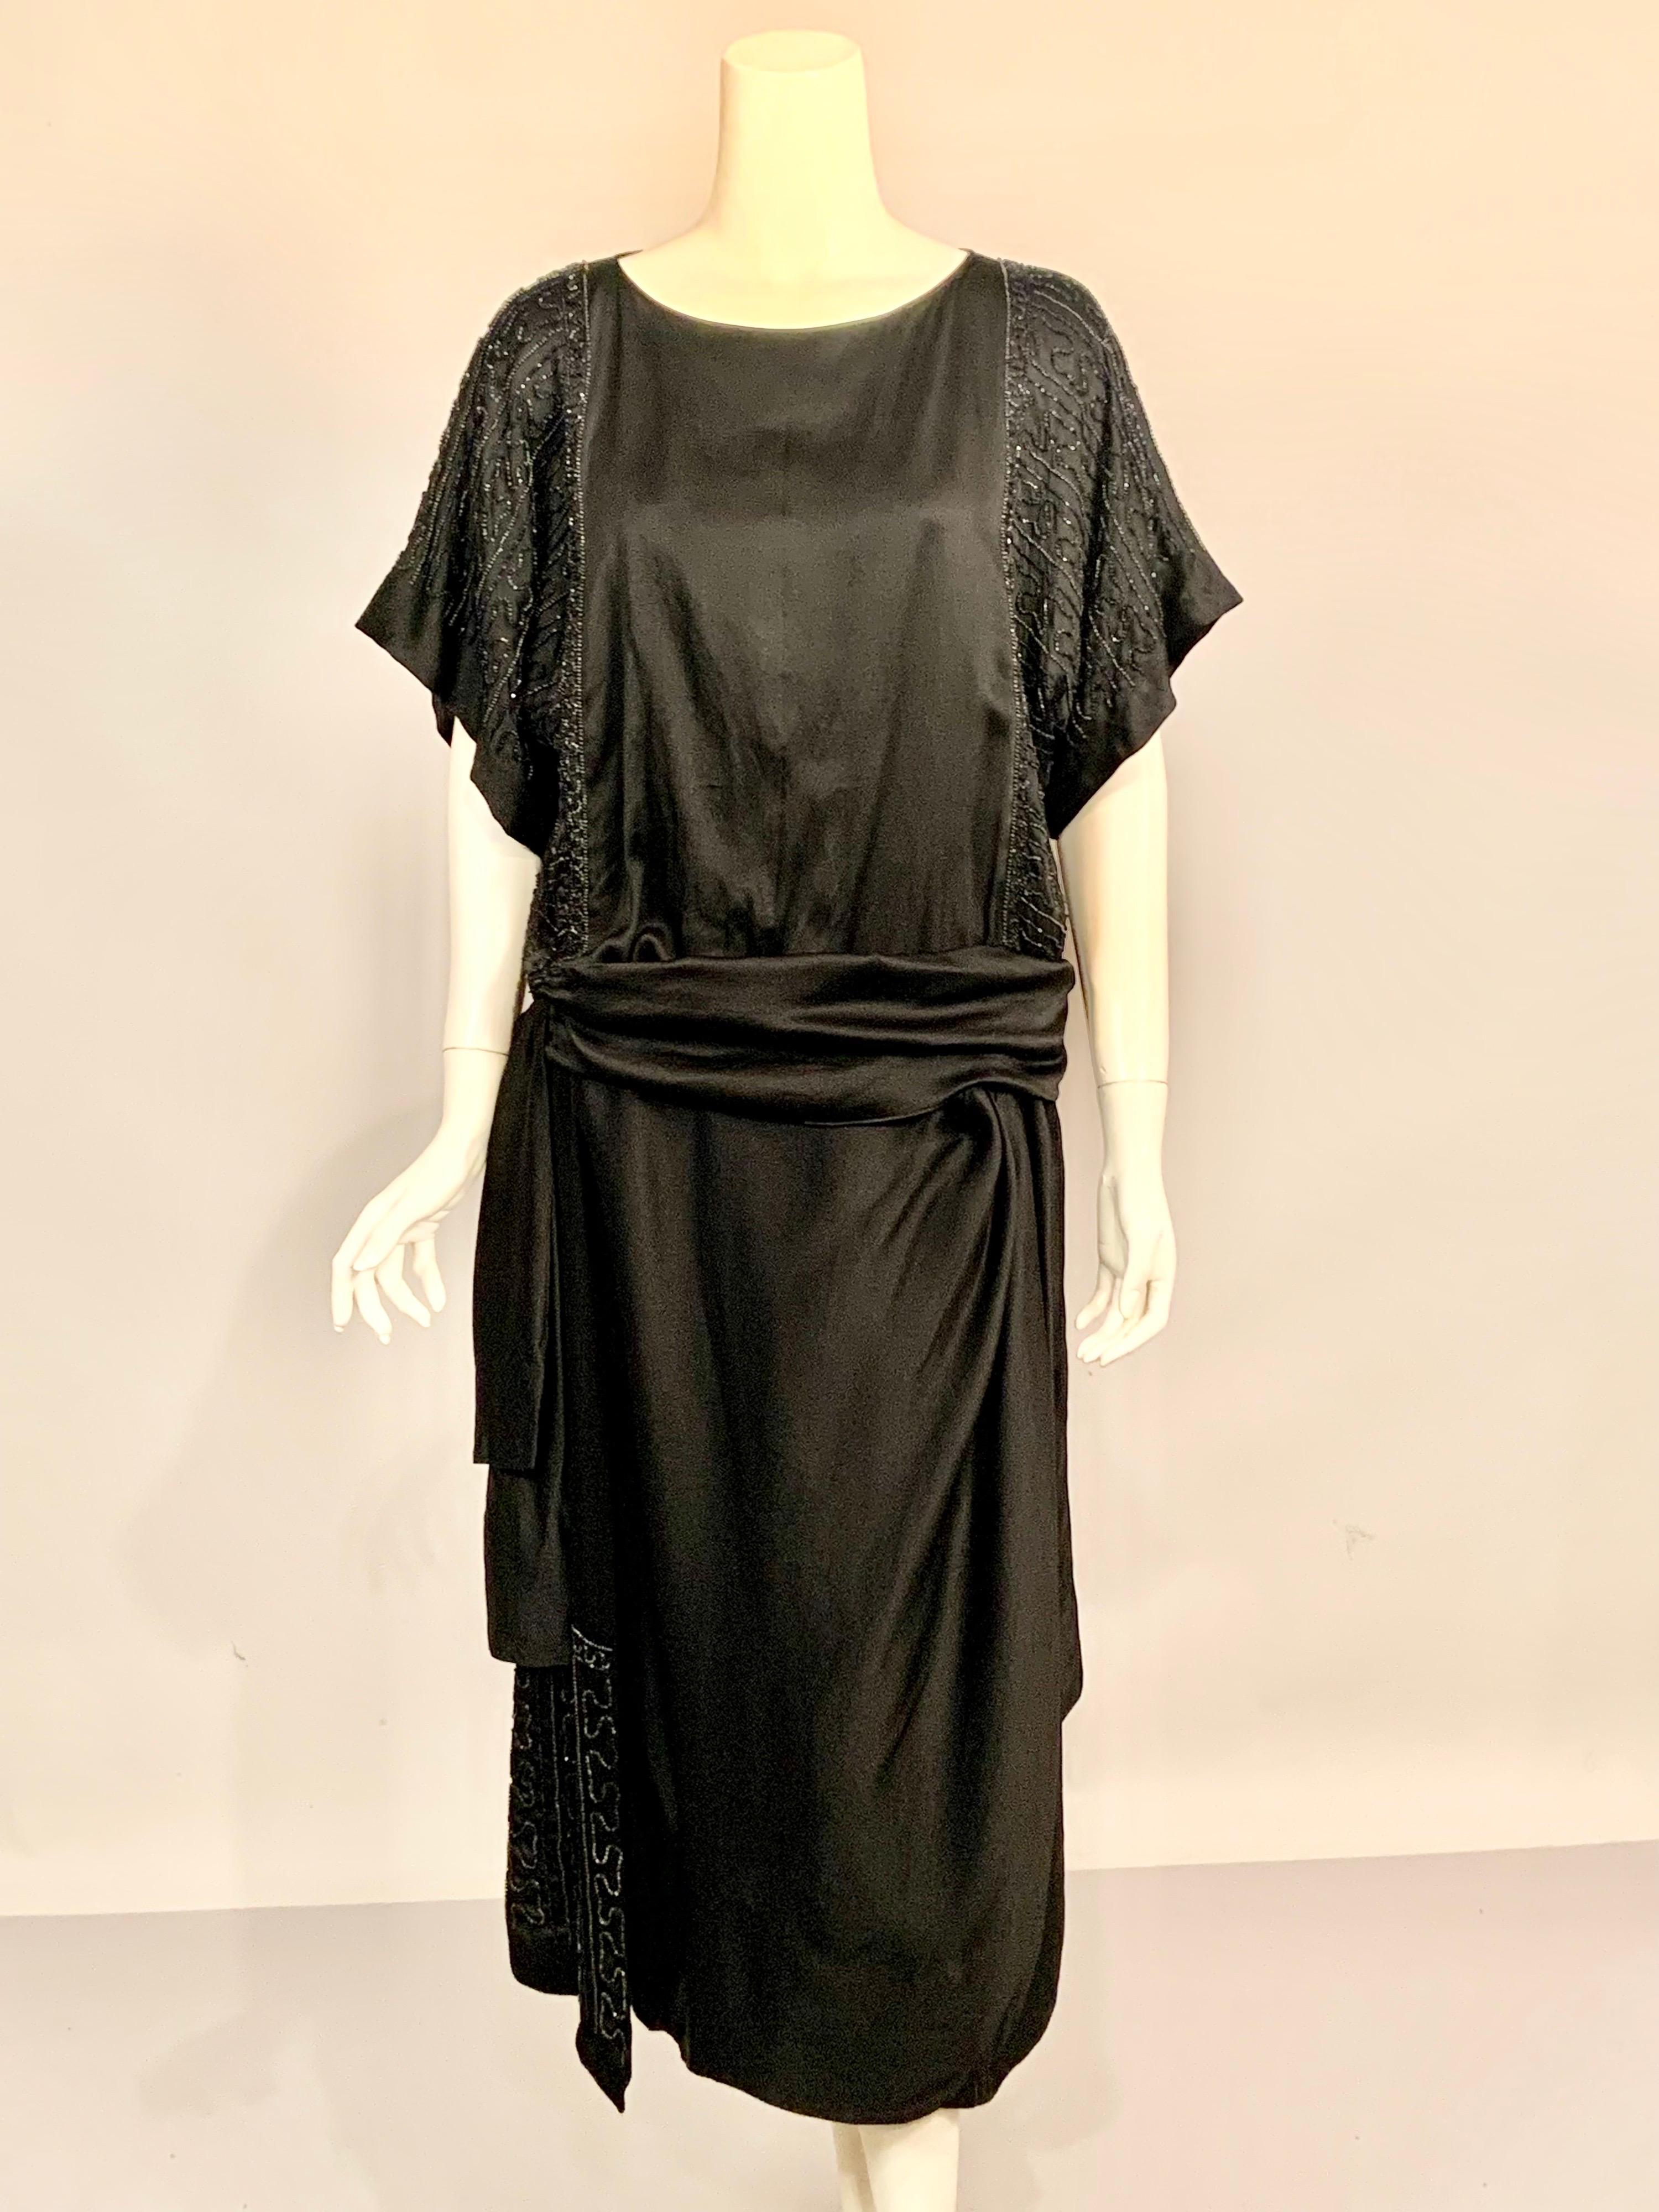 1920 silk dress